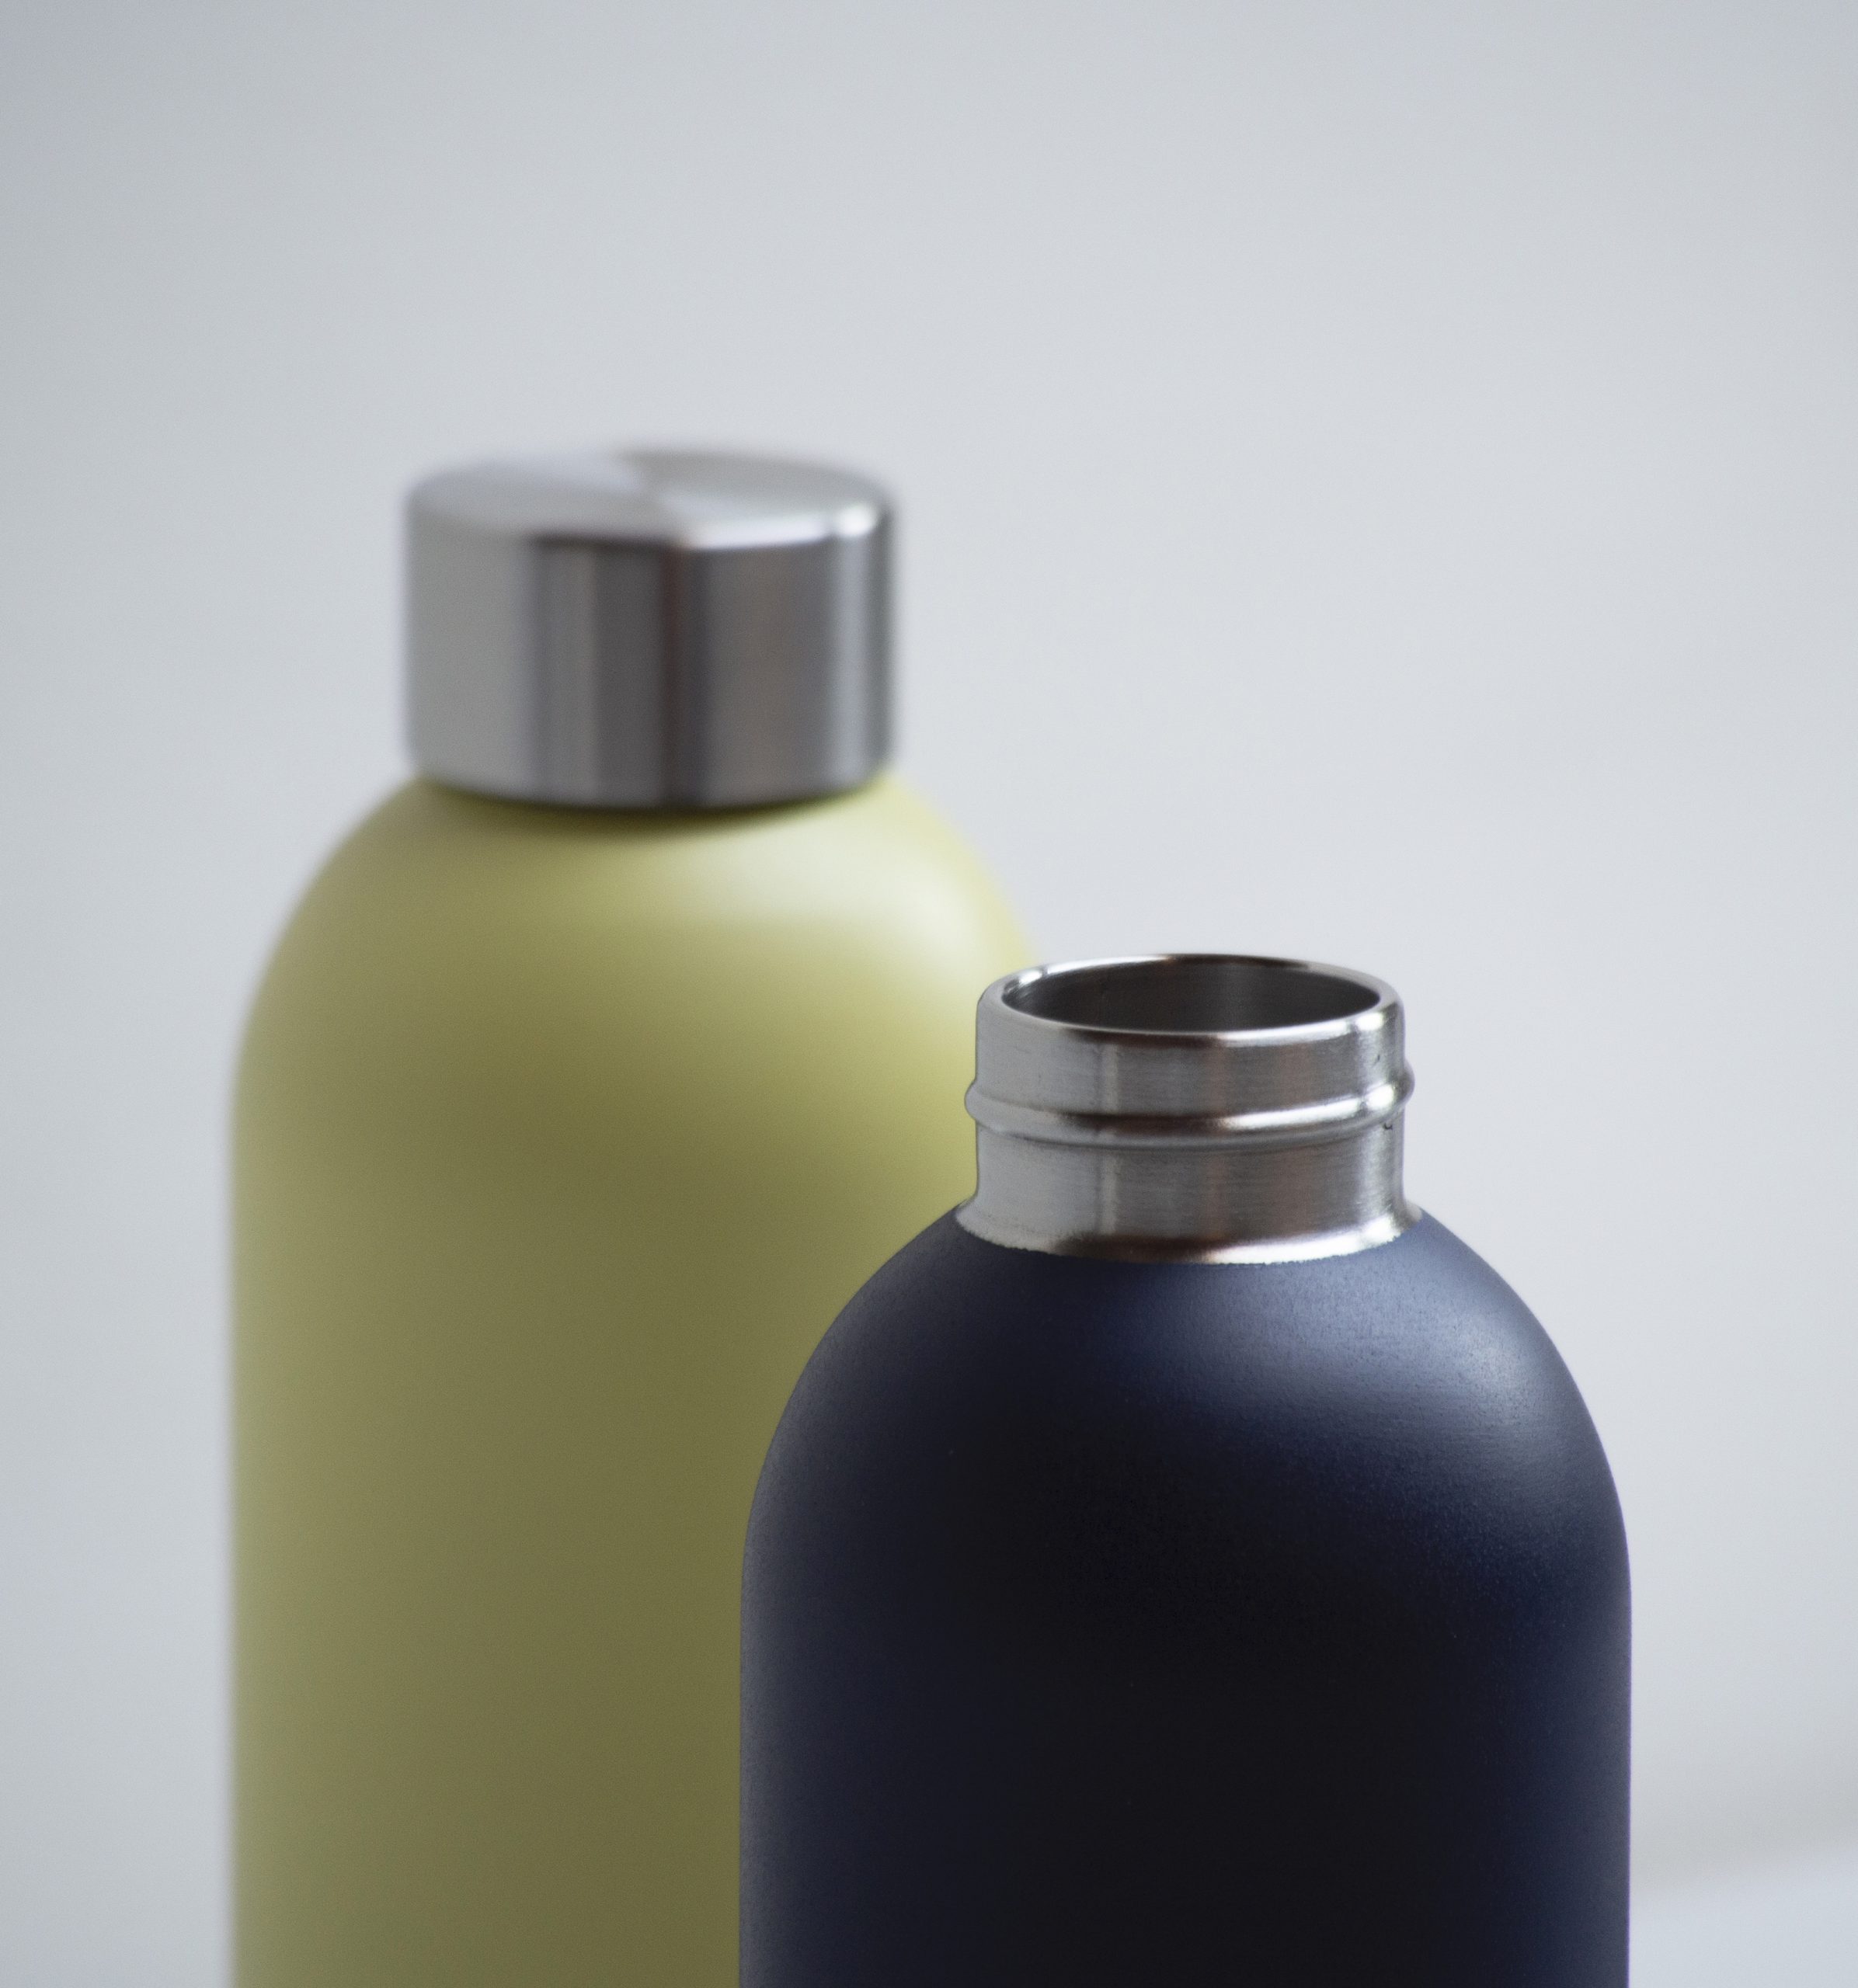 Detail of Keep Cool reusable bottle by Debiasi Sandri for Stelton